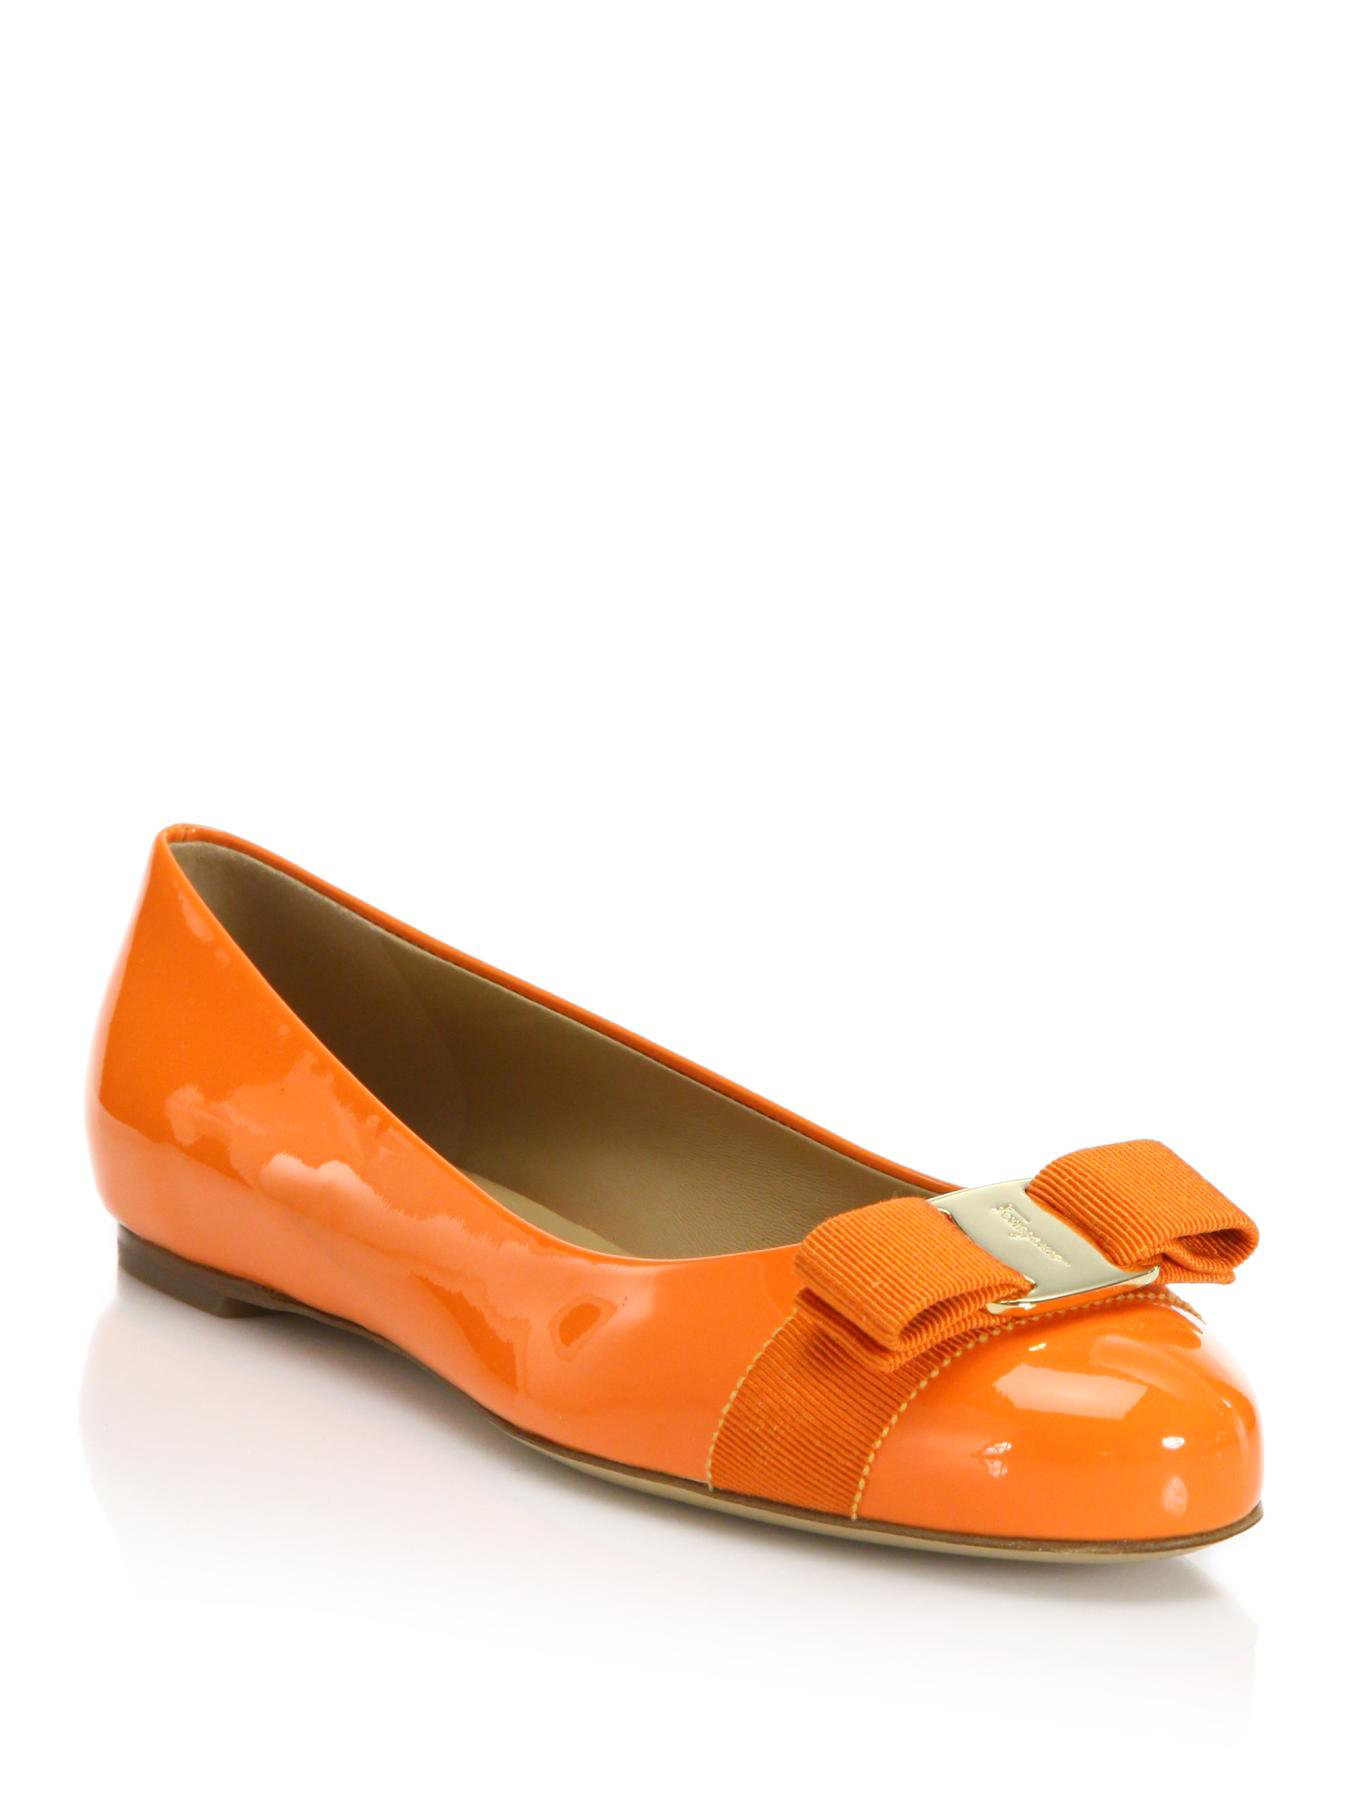 Lyst - Ferragamo Varina Patent-Leather Ballet Flats in Orange